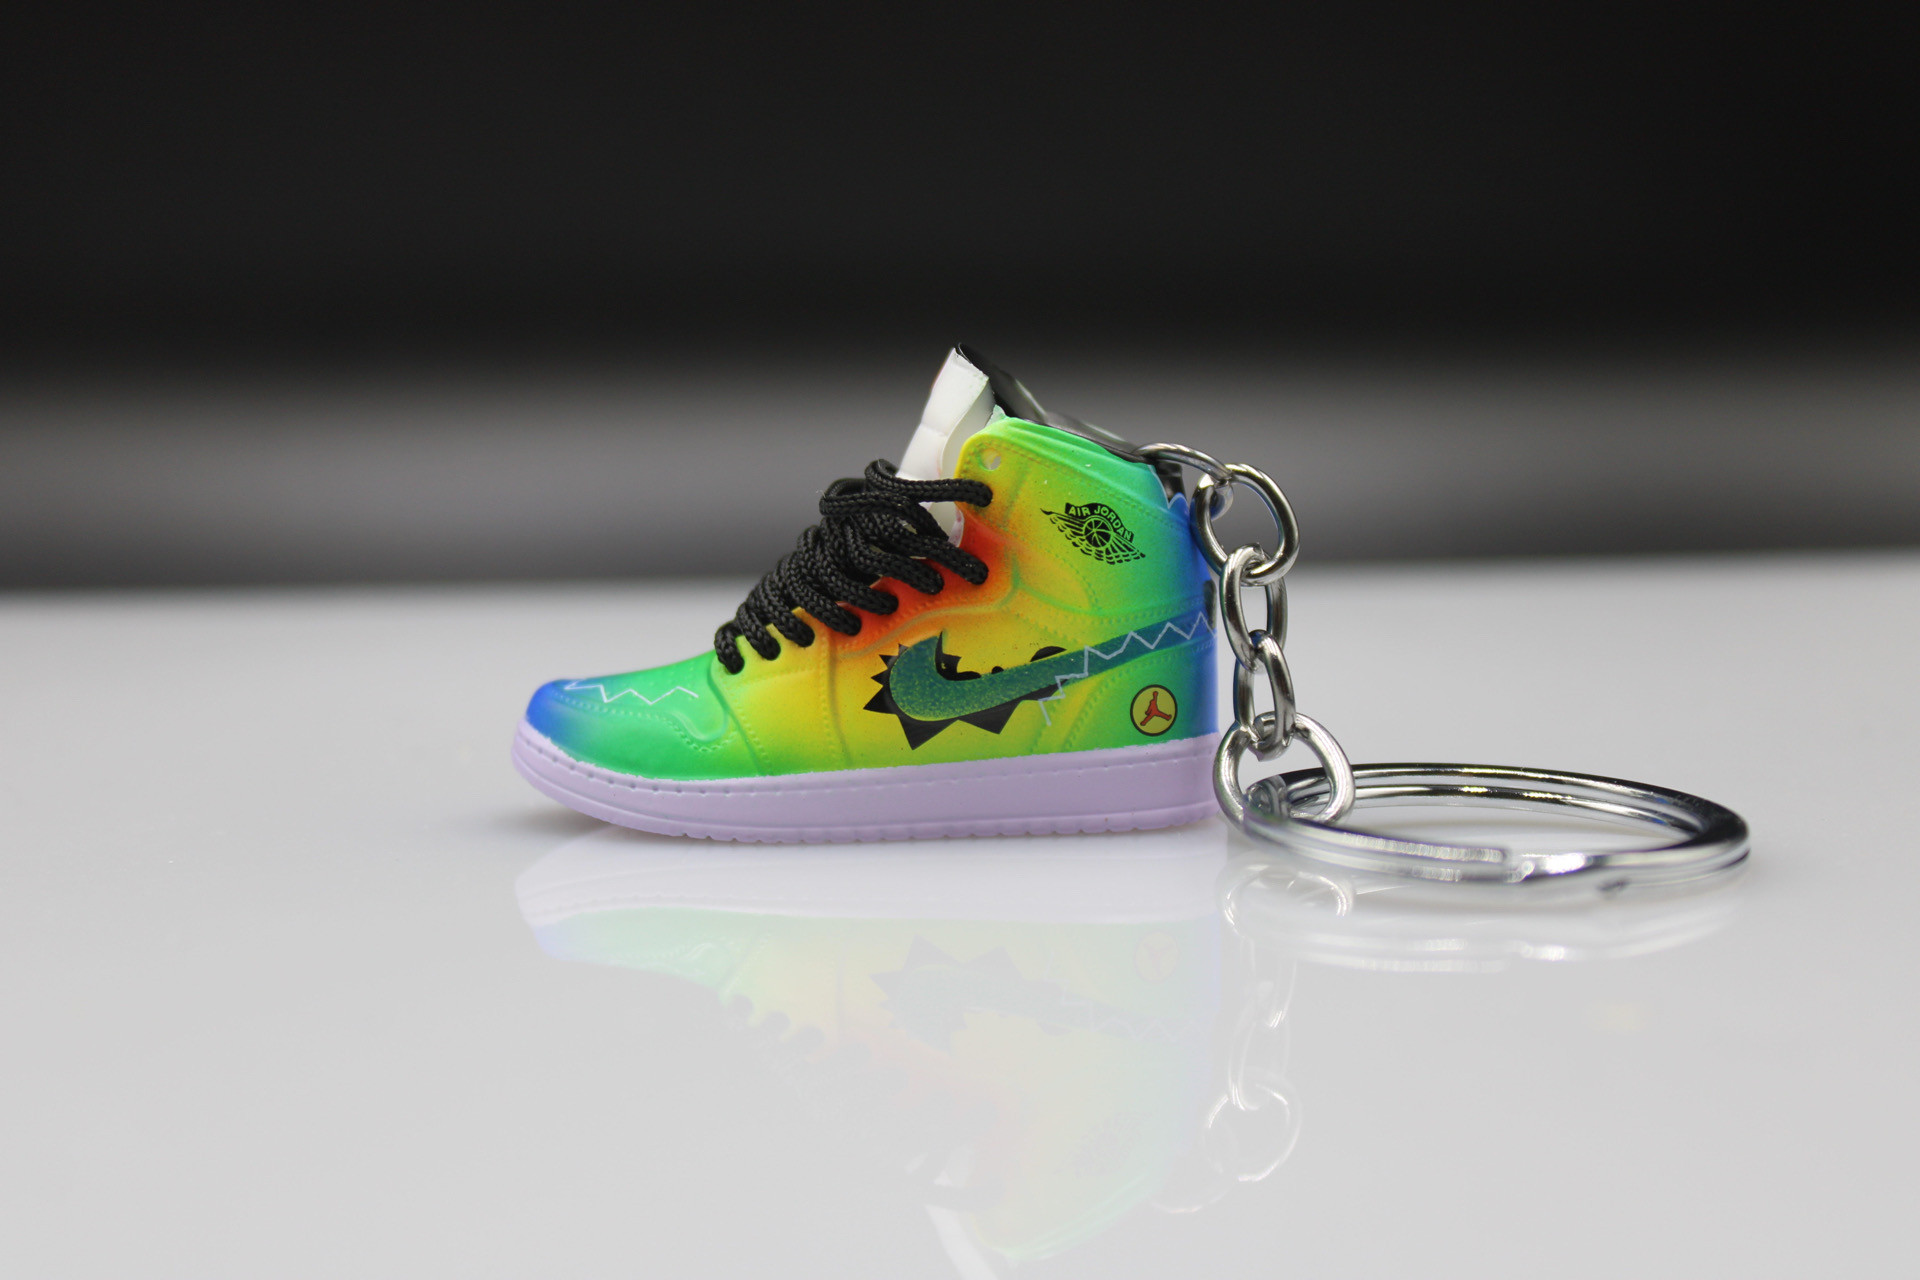 Porte-clés Sneakers 3D - Air Jordan 1 X J. Balvin - Colores Y Vibras